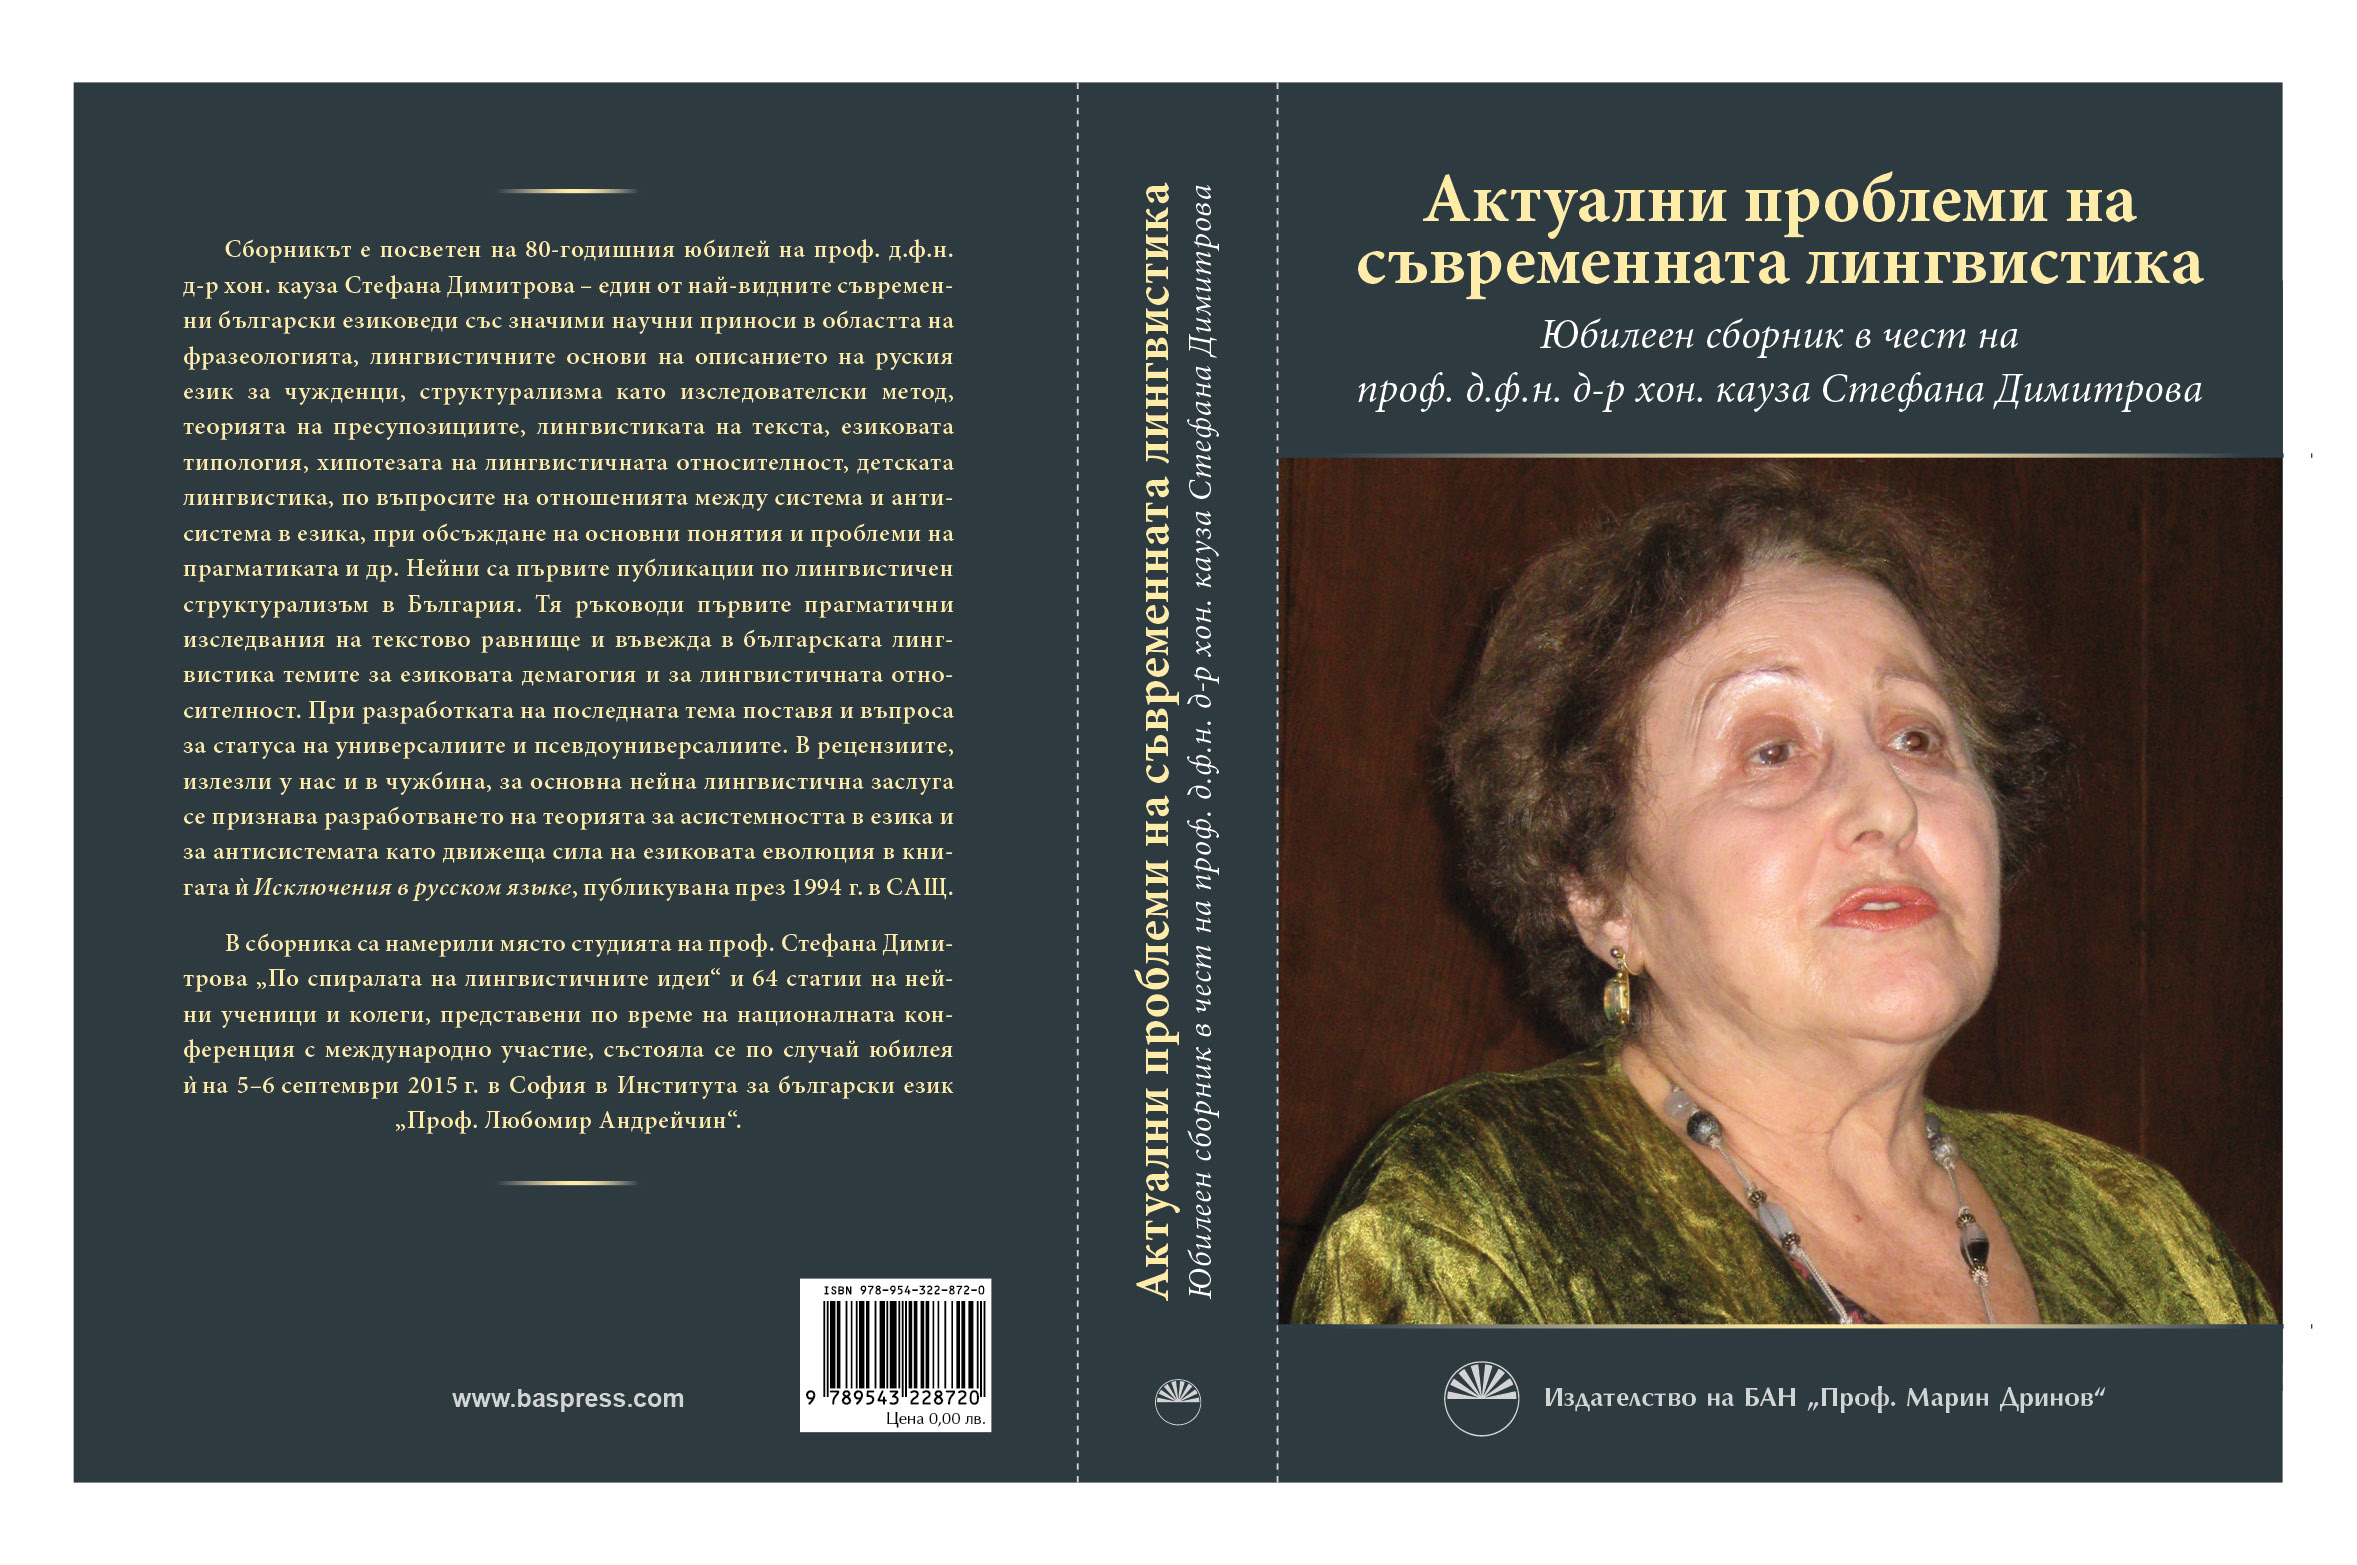 Book Dedicated to the 80th Anniversary of prof. Stefana Dimitrova